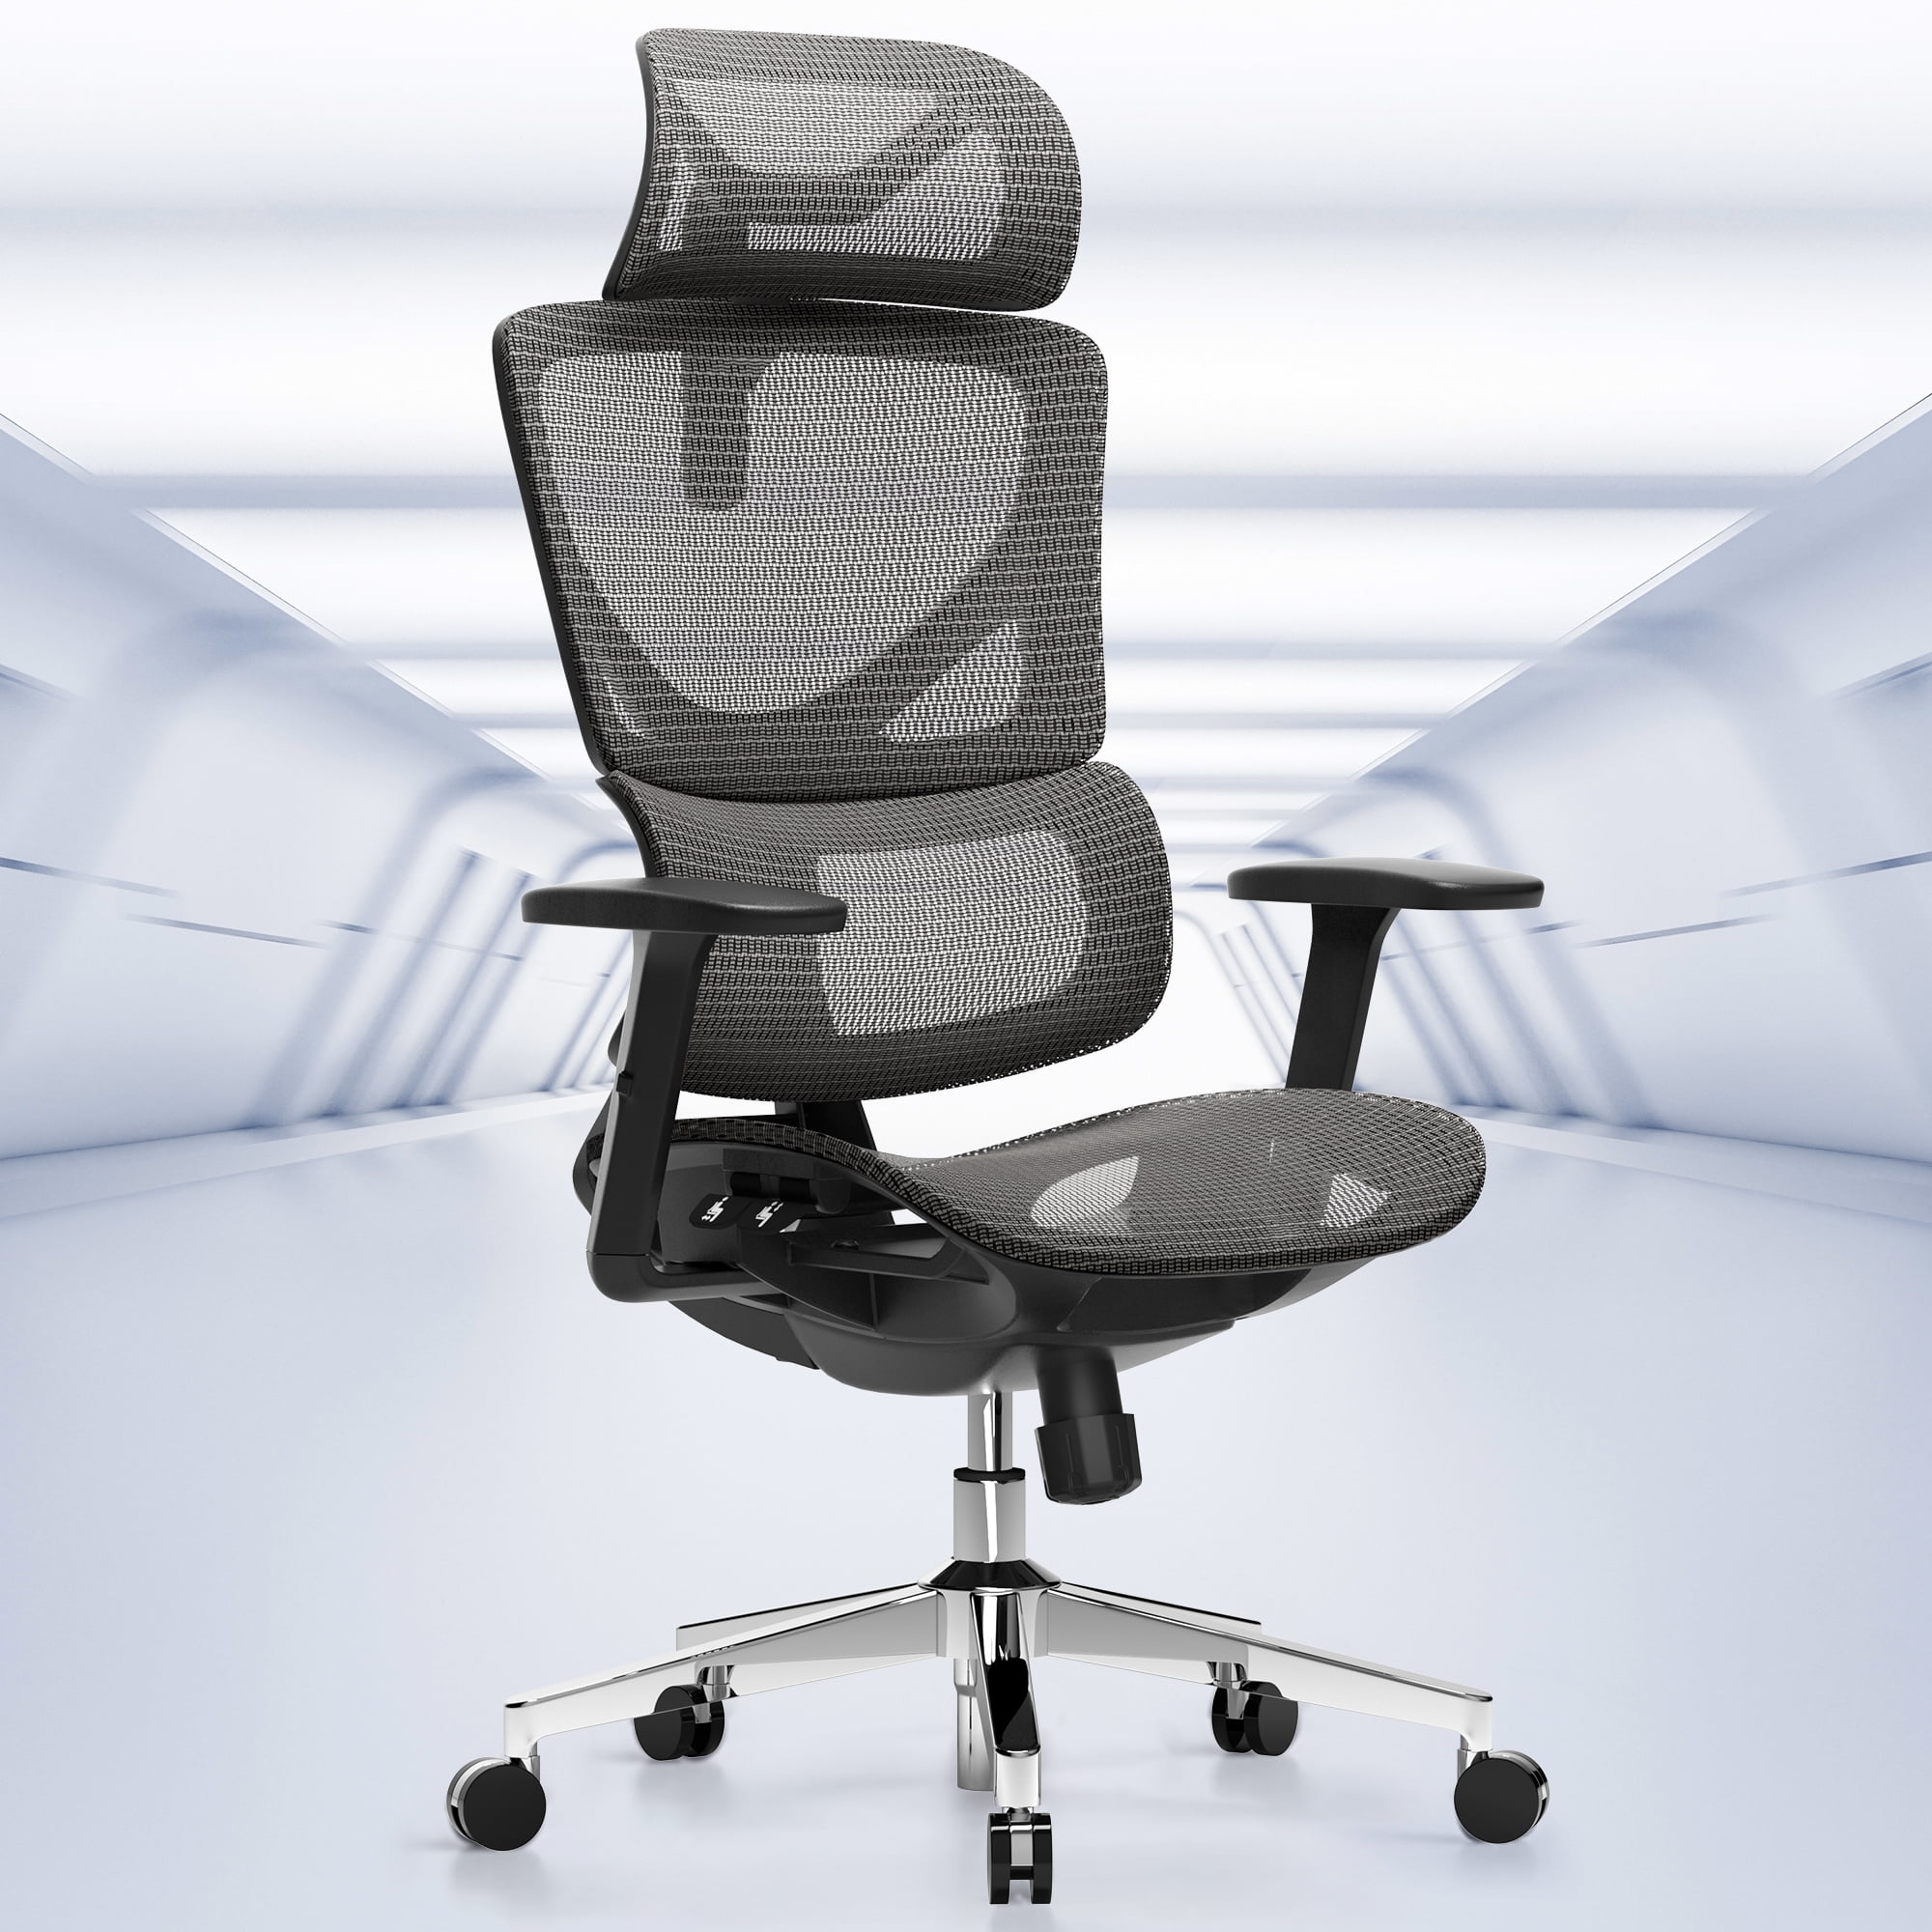 XUER Ergonomic Office Chair, Mesh Computer Desk Chair with